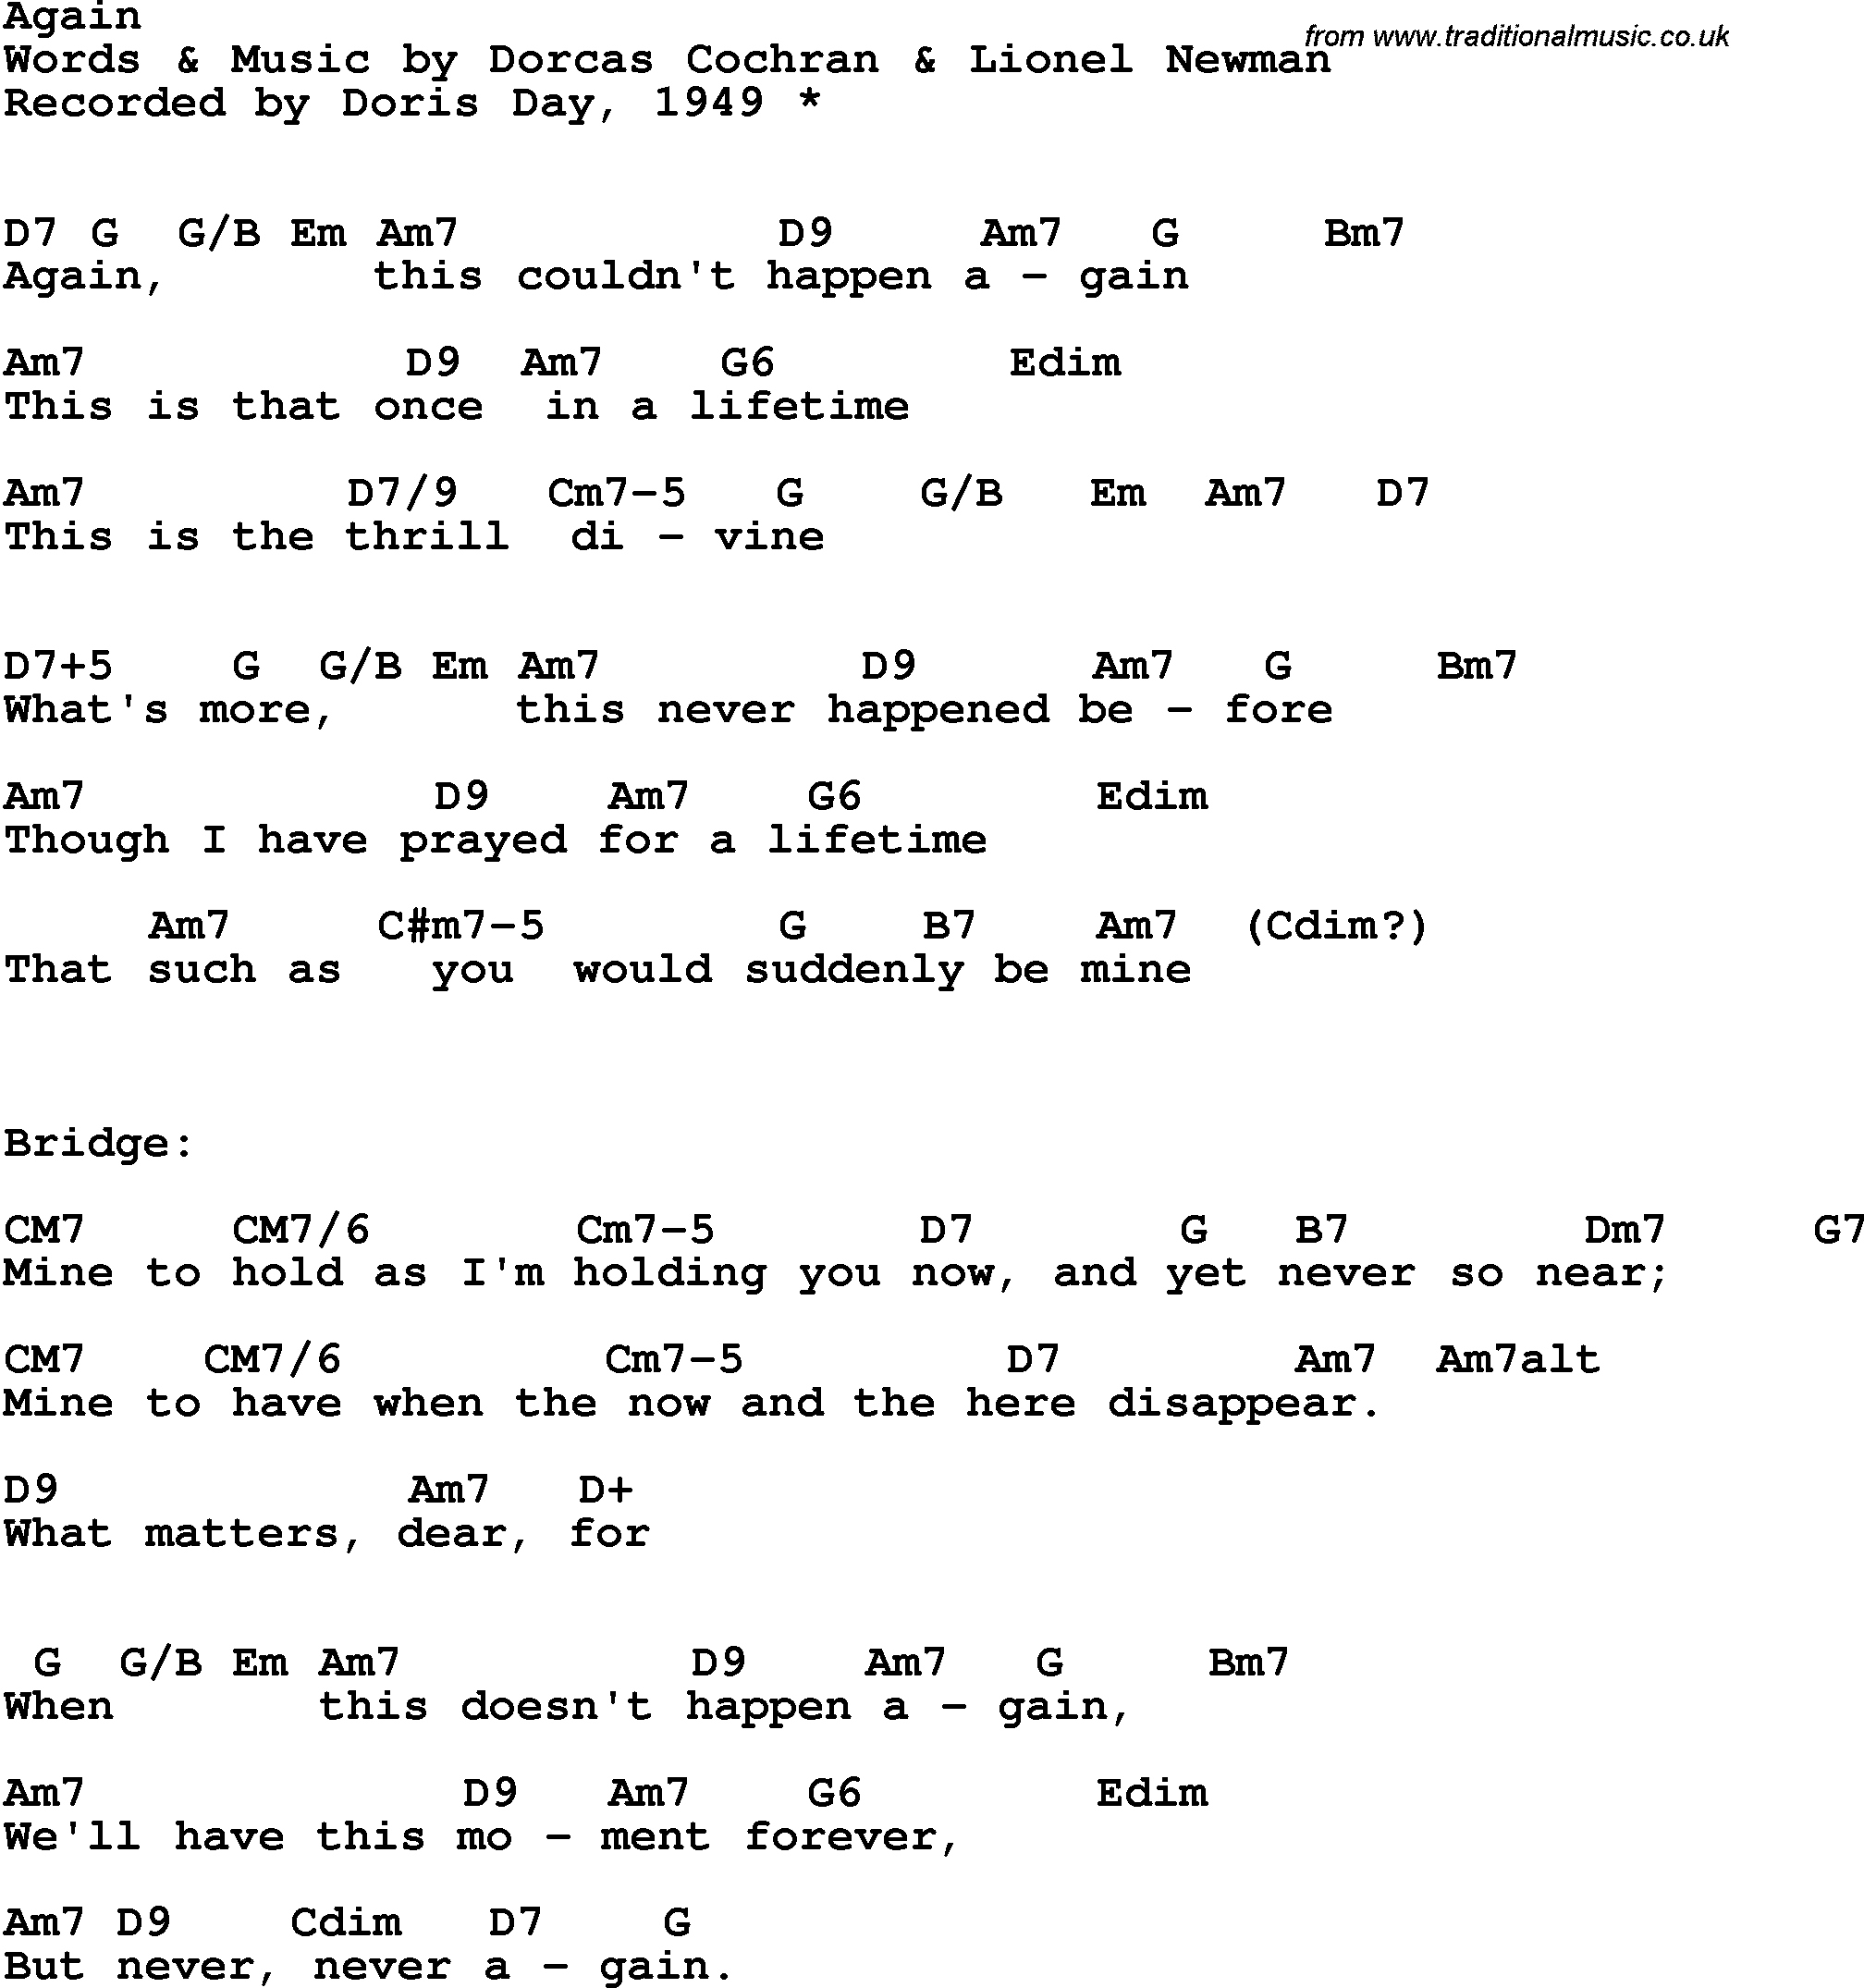 Song Lyrics with guitar chords for Again - Doris Day, 1949